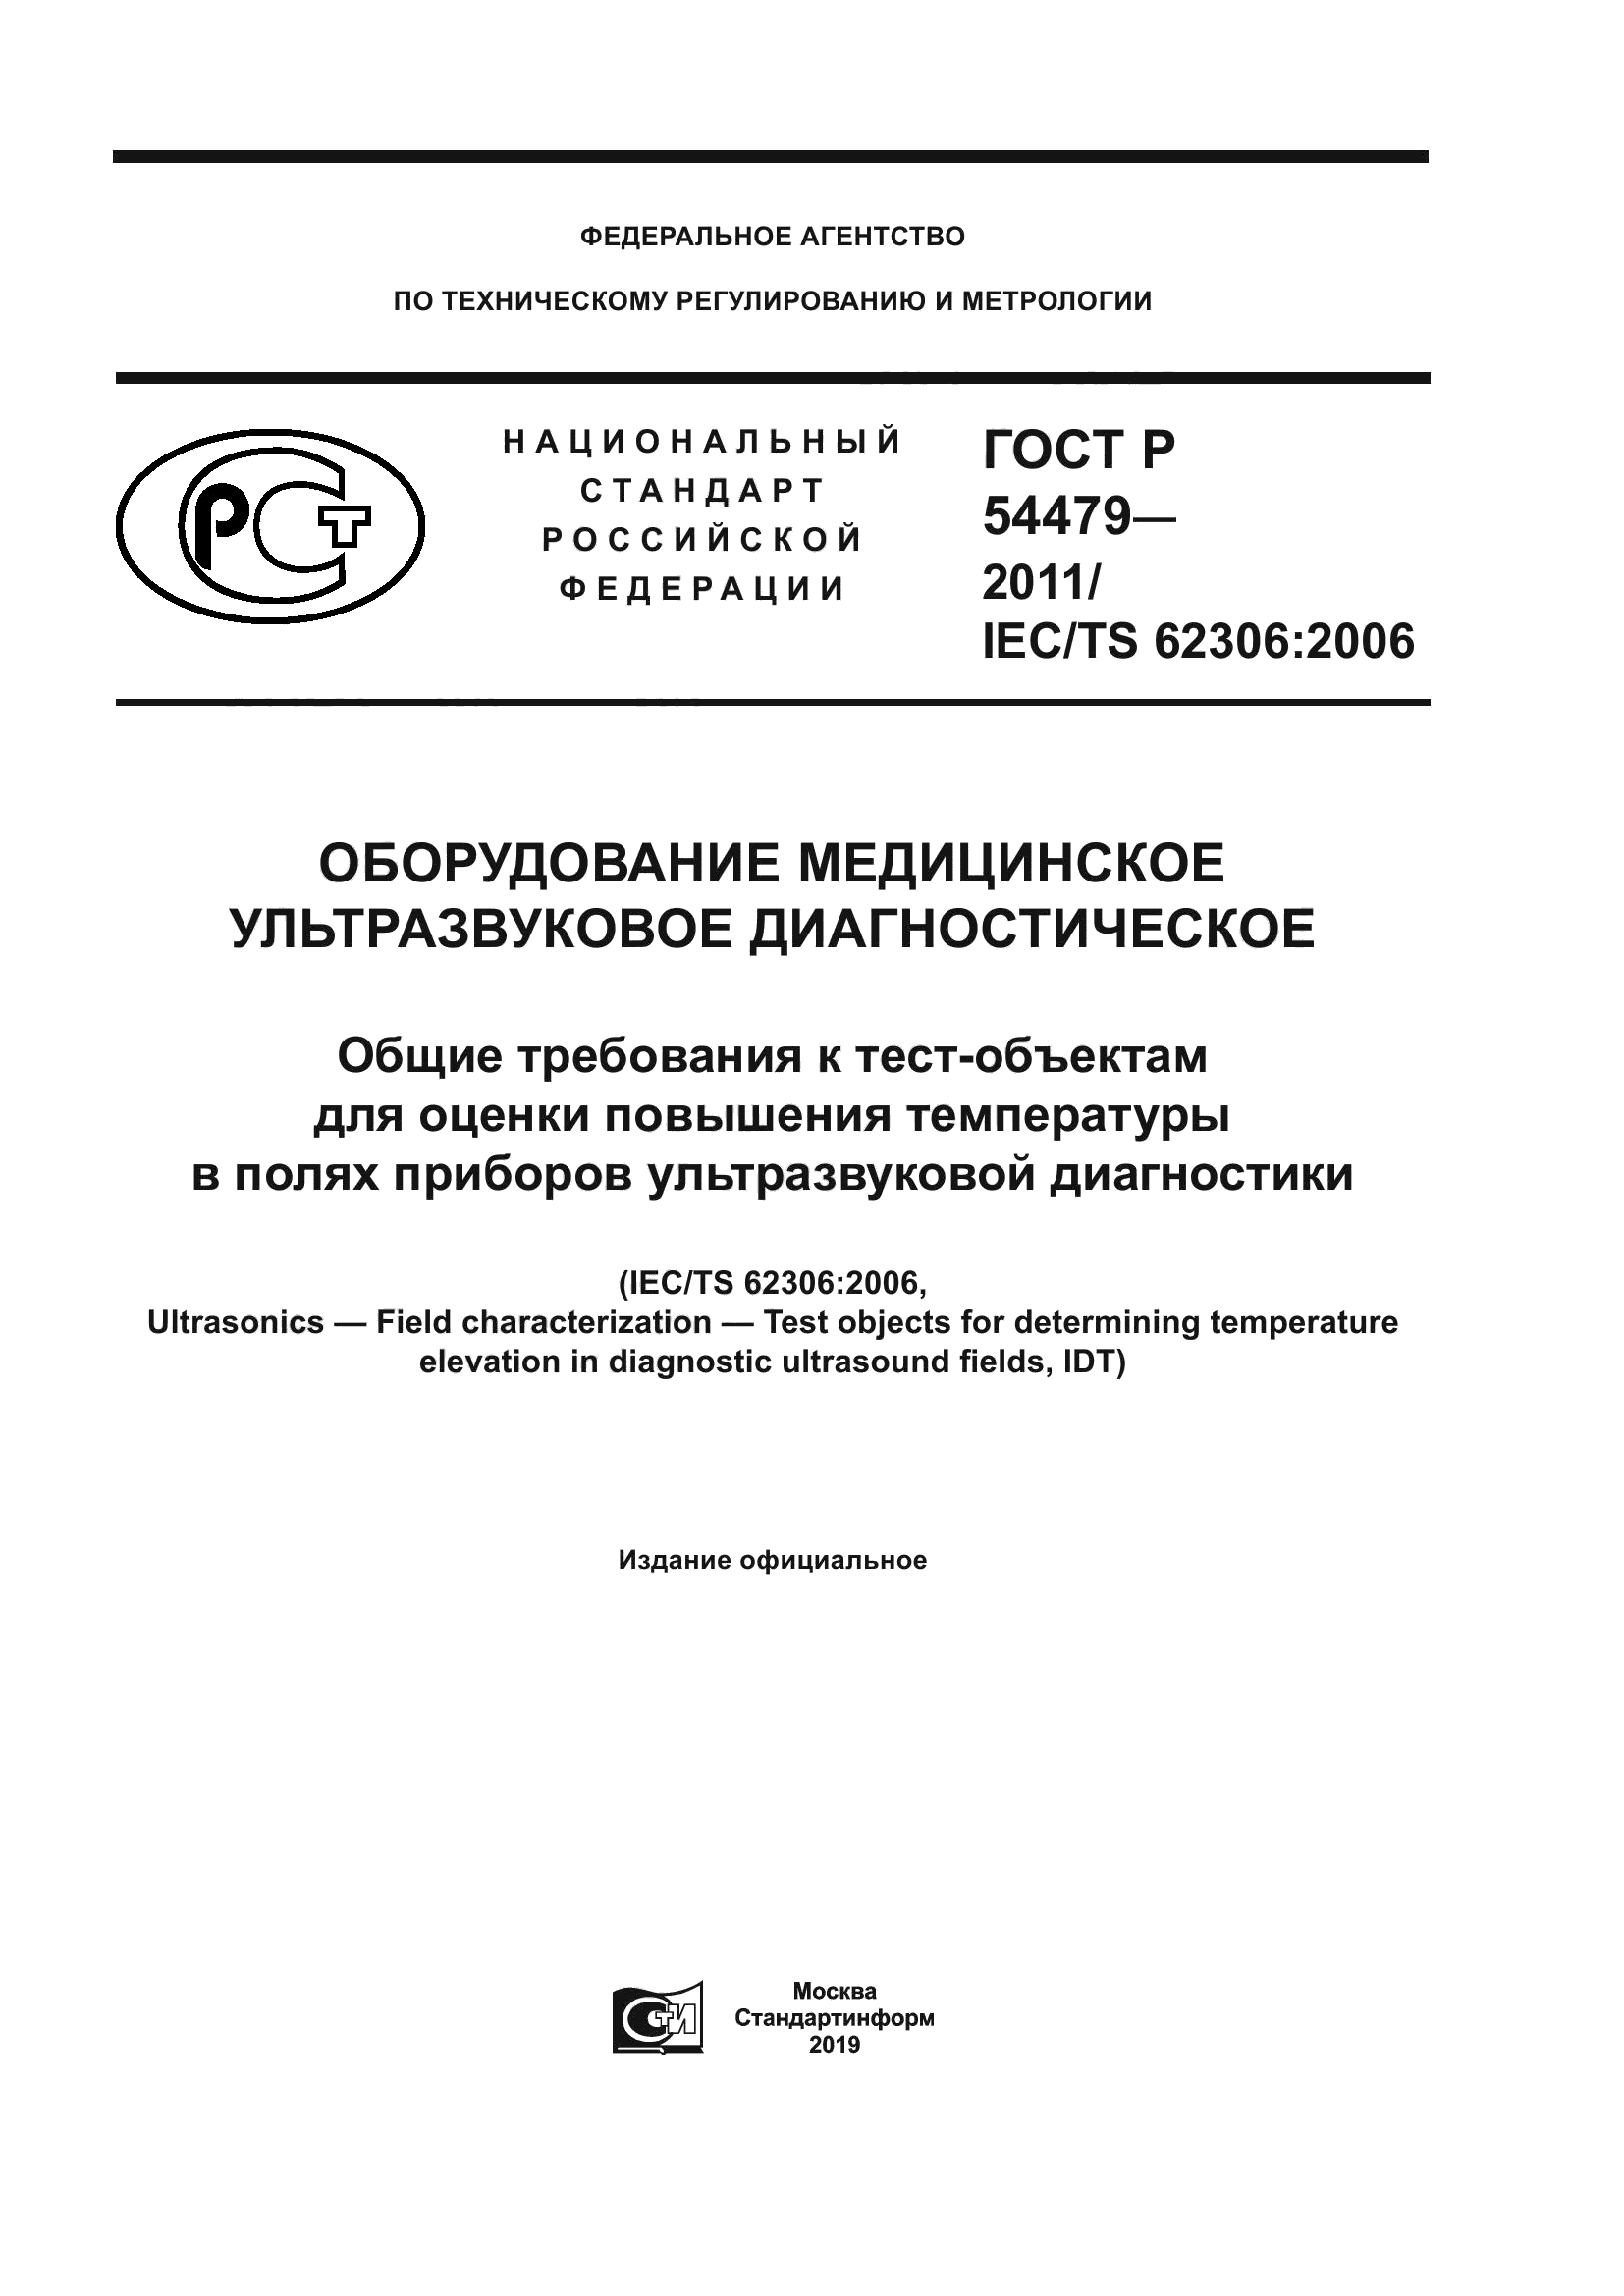 ГОСТ Р 54479-2011